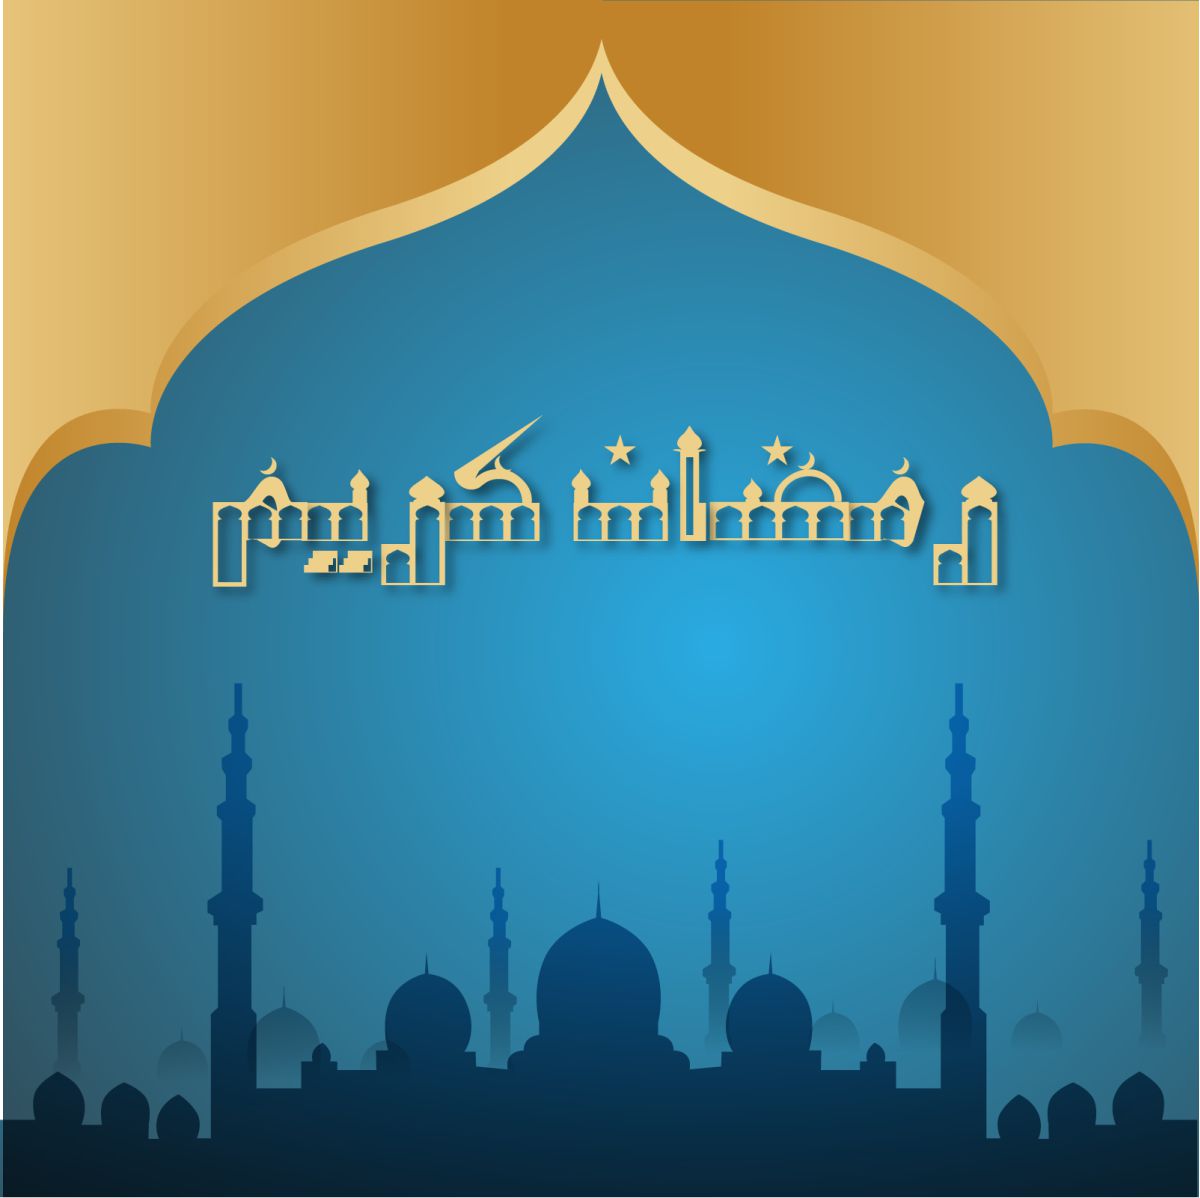 Ramadan karim image vector eps file